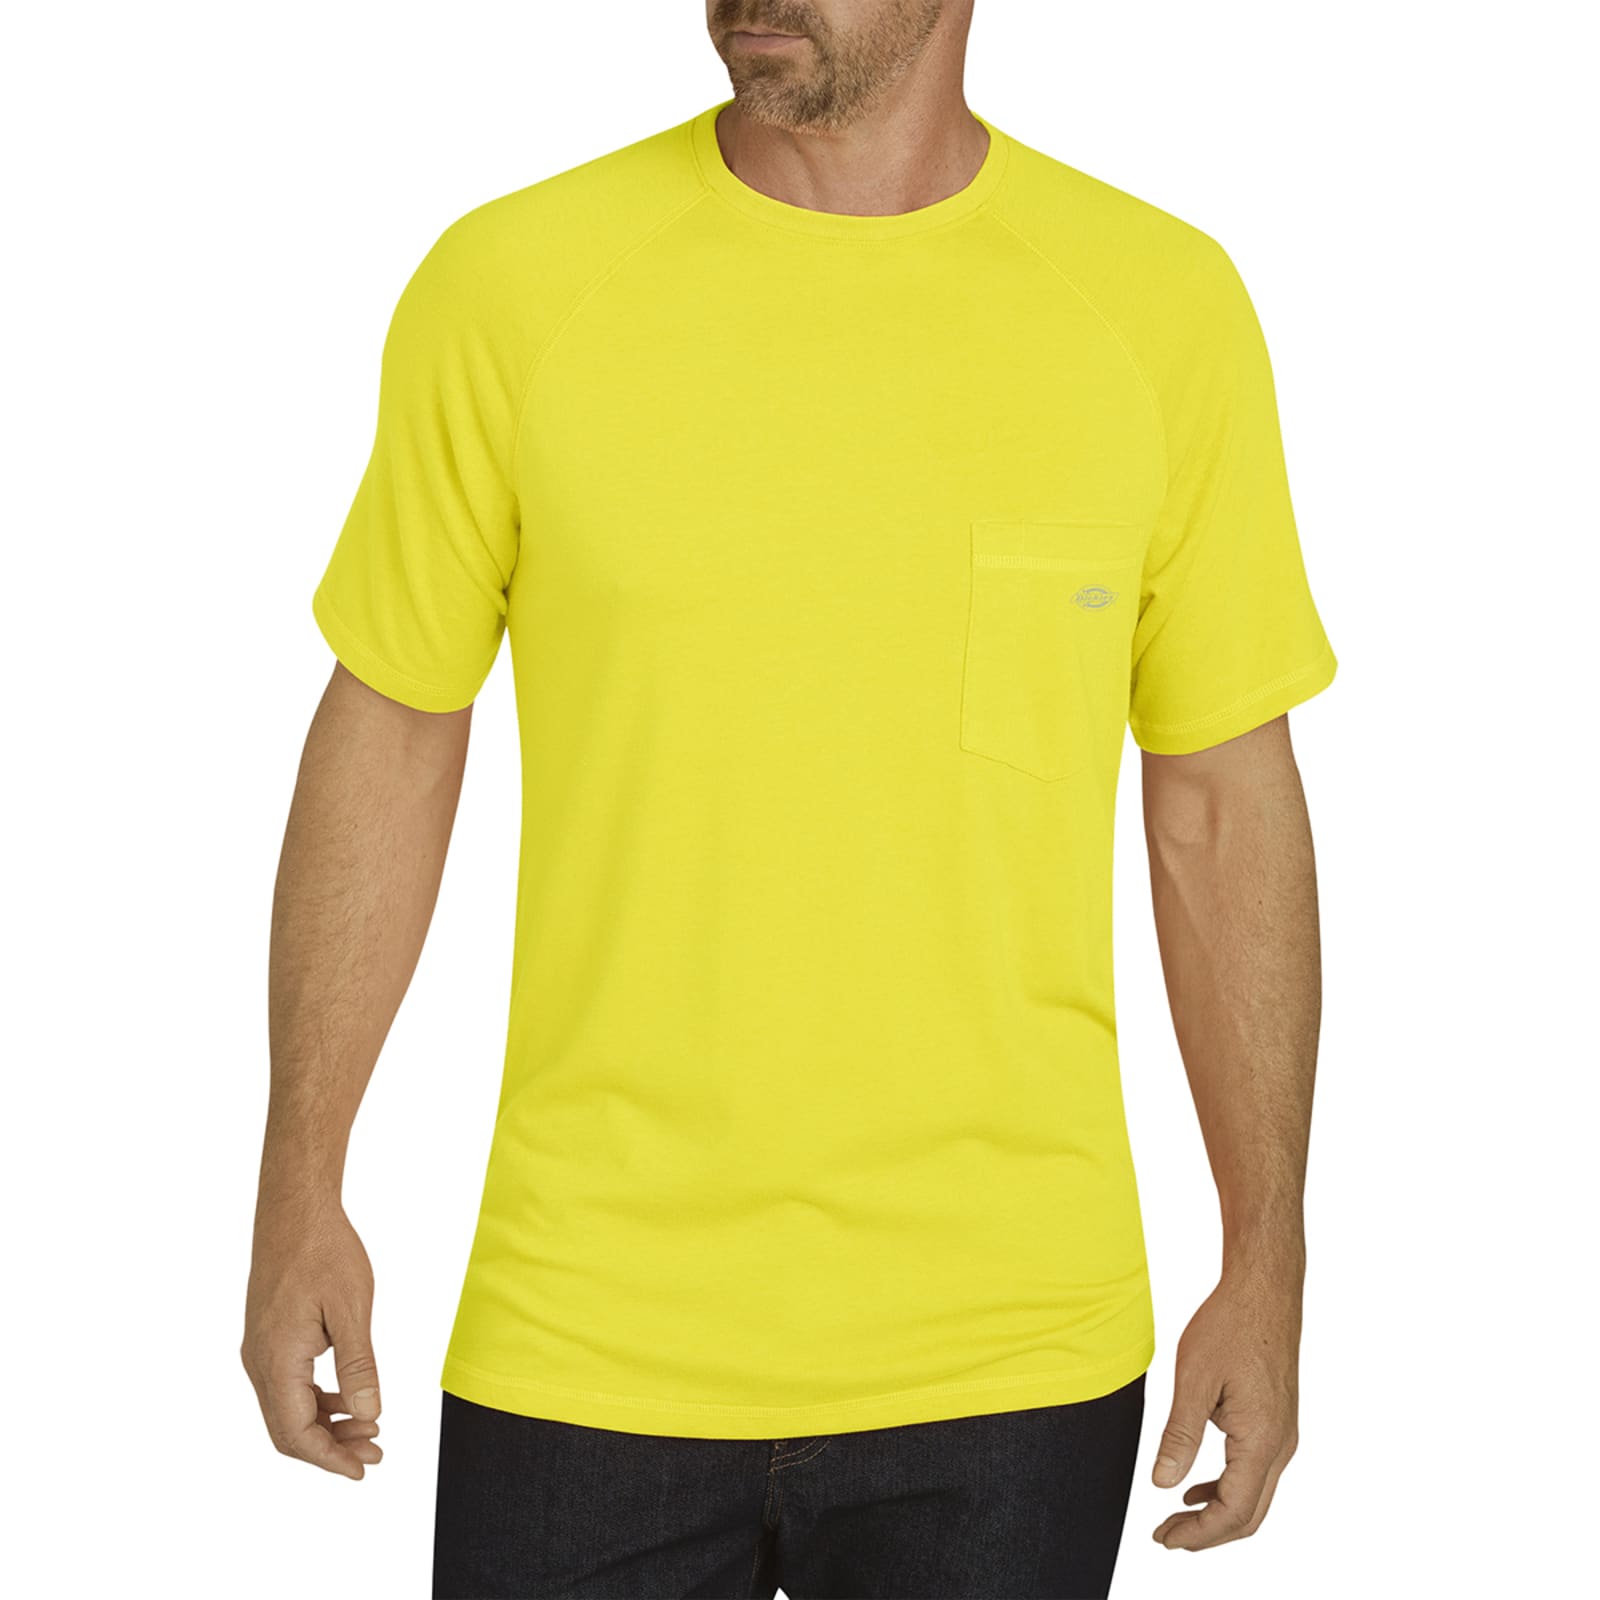 Dickies Big & Tall Bright Yellow Performance Cooling T-Shirt by Dickies at Fleet Farm